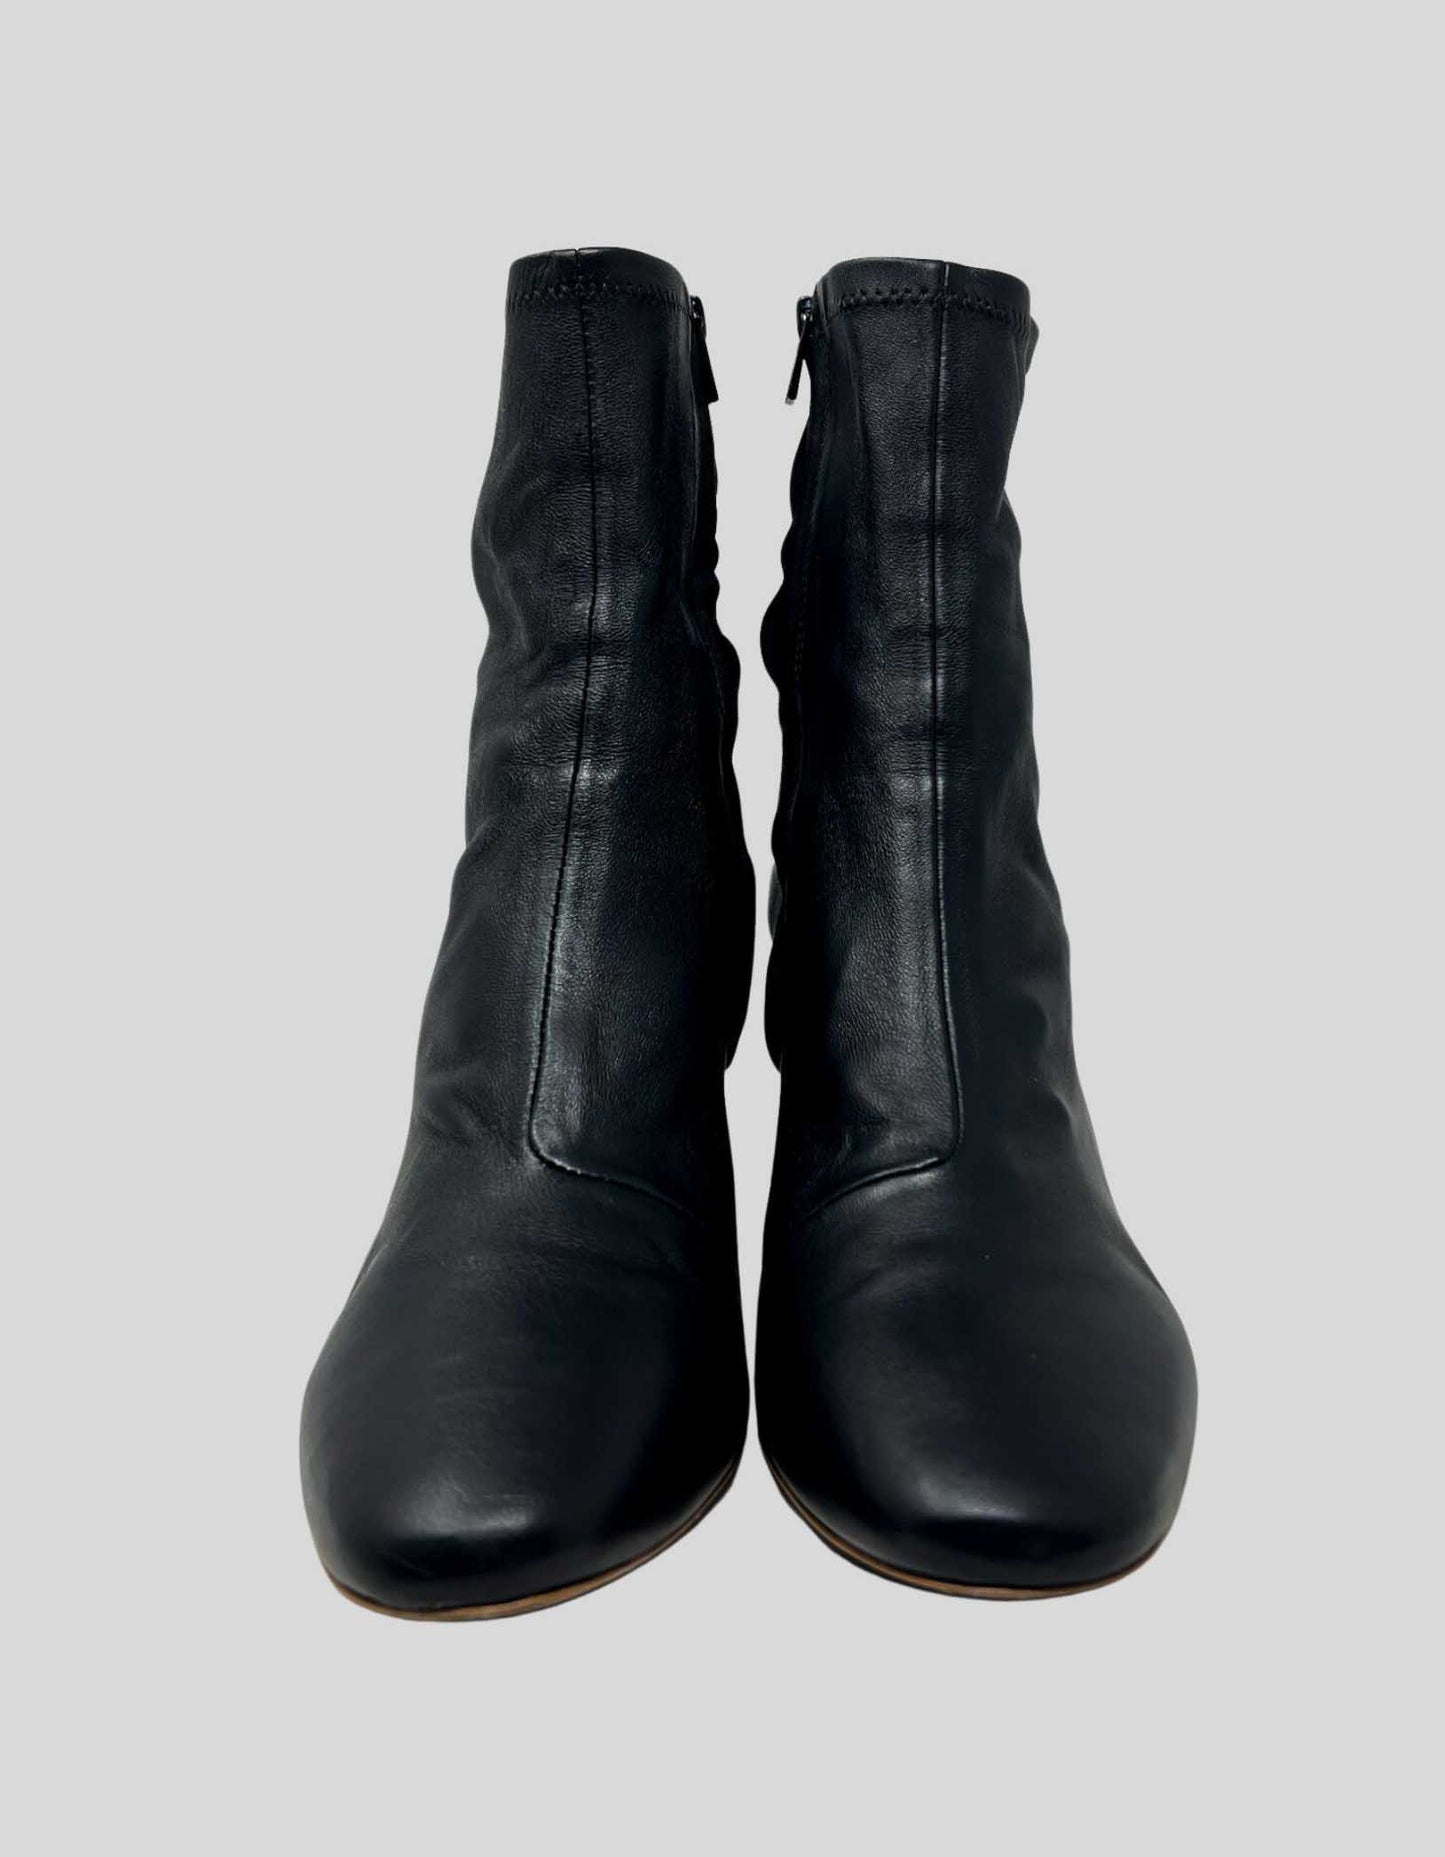 LOEFFLER RANDALL Black Leather Booties - 9B US